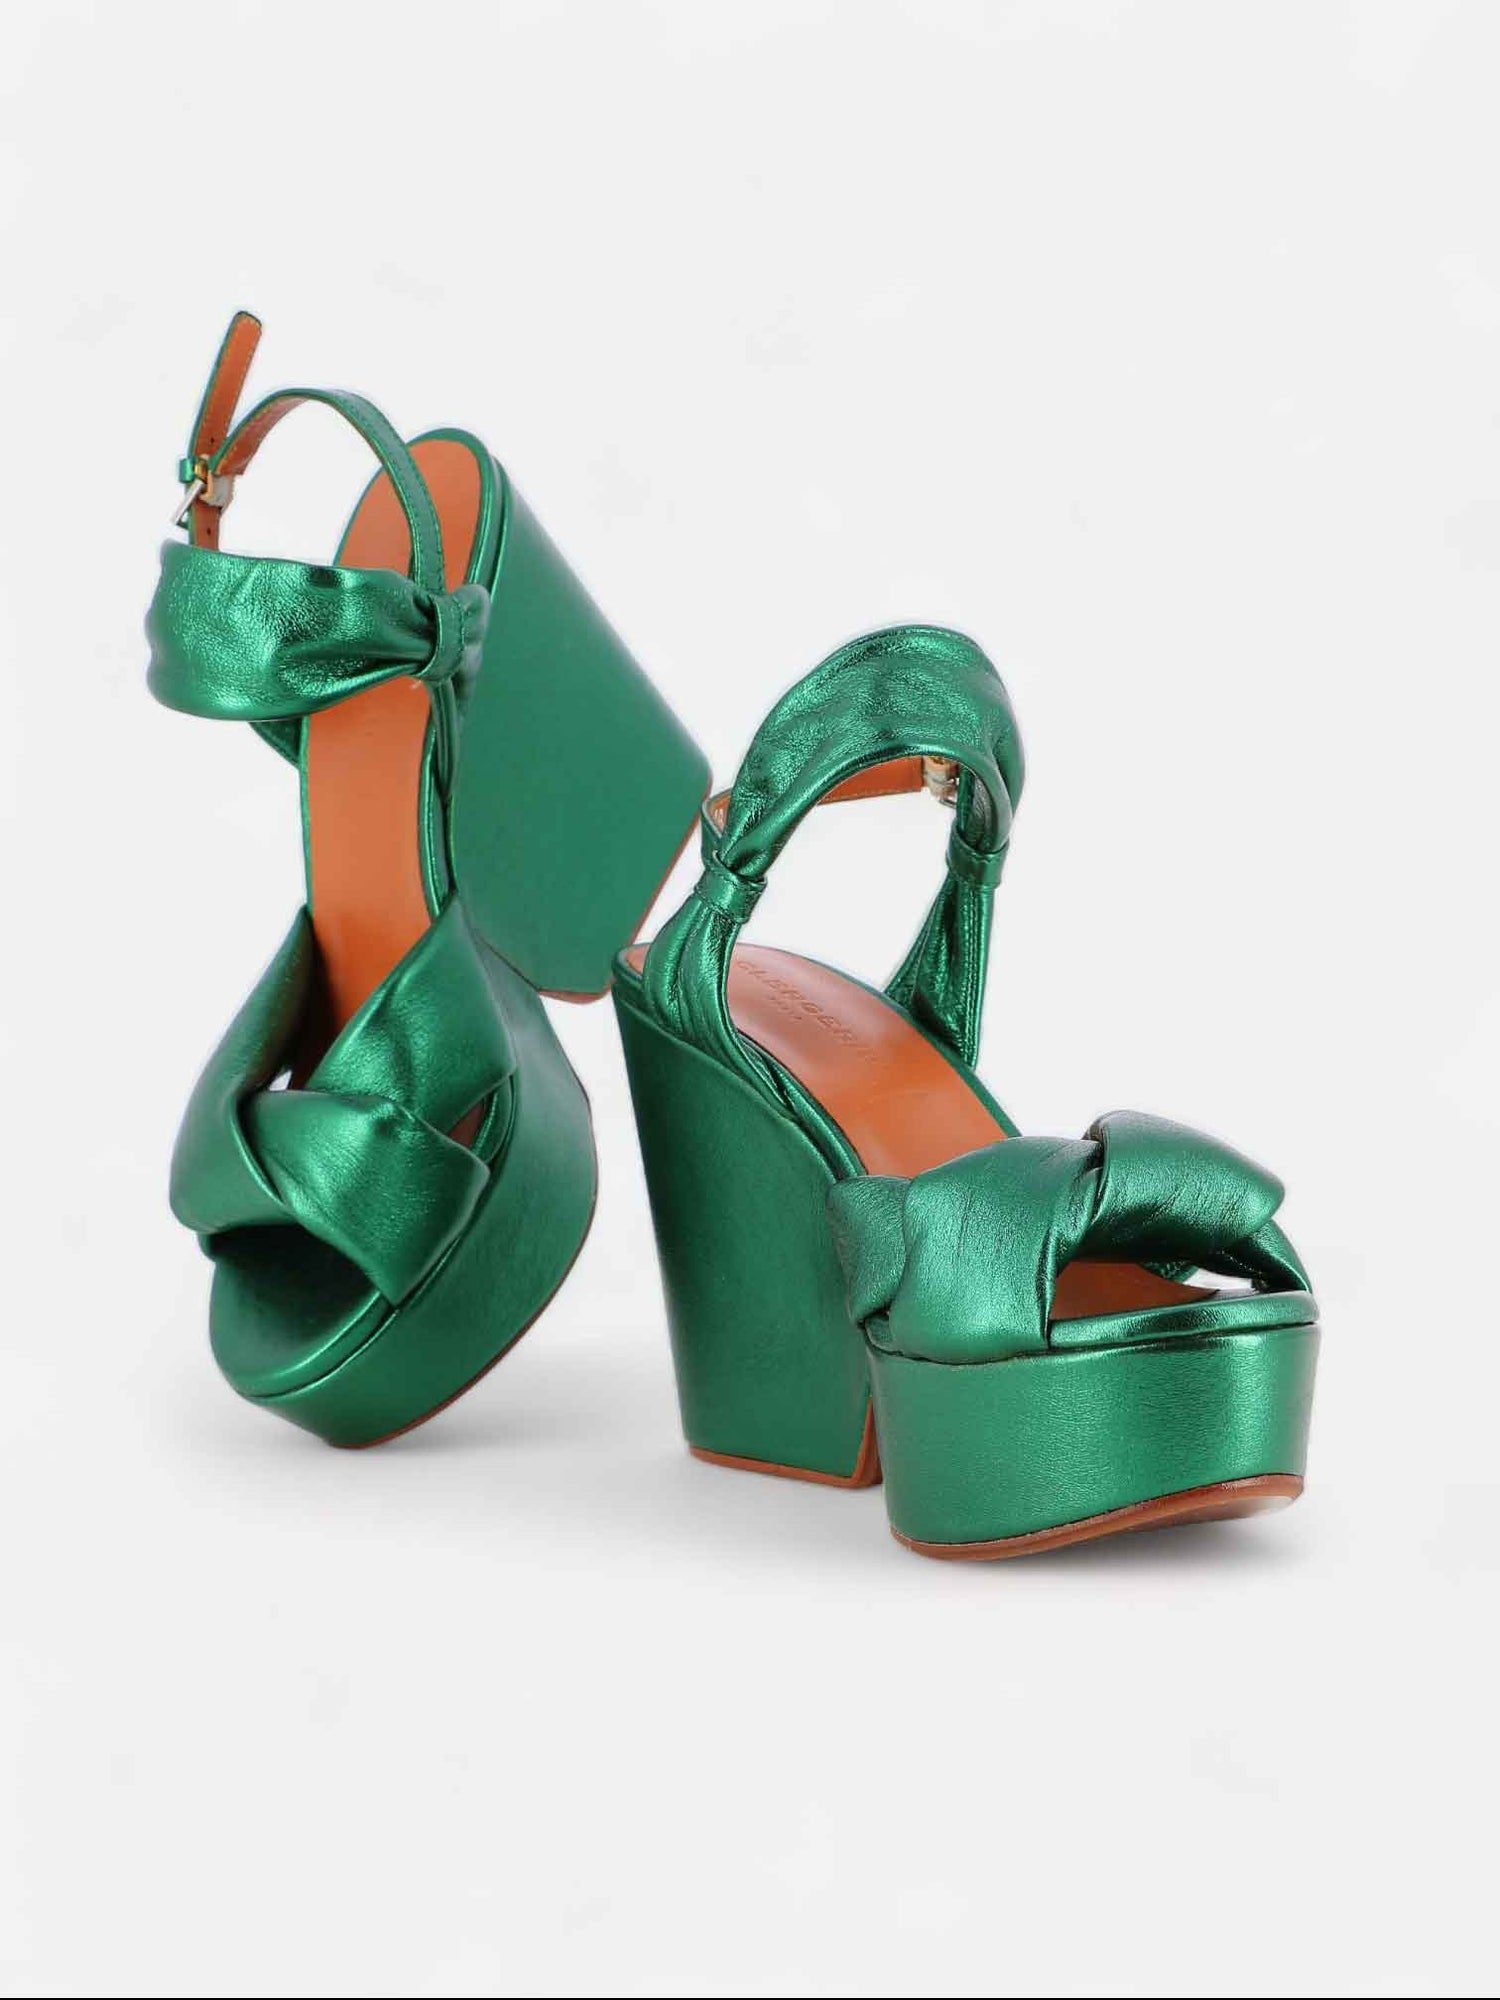 SANDALS - DARLIE sandals, lambskin green metallic - 3606063895897 - Clergerie Paris - Europe